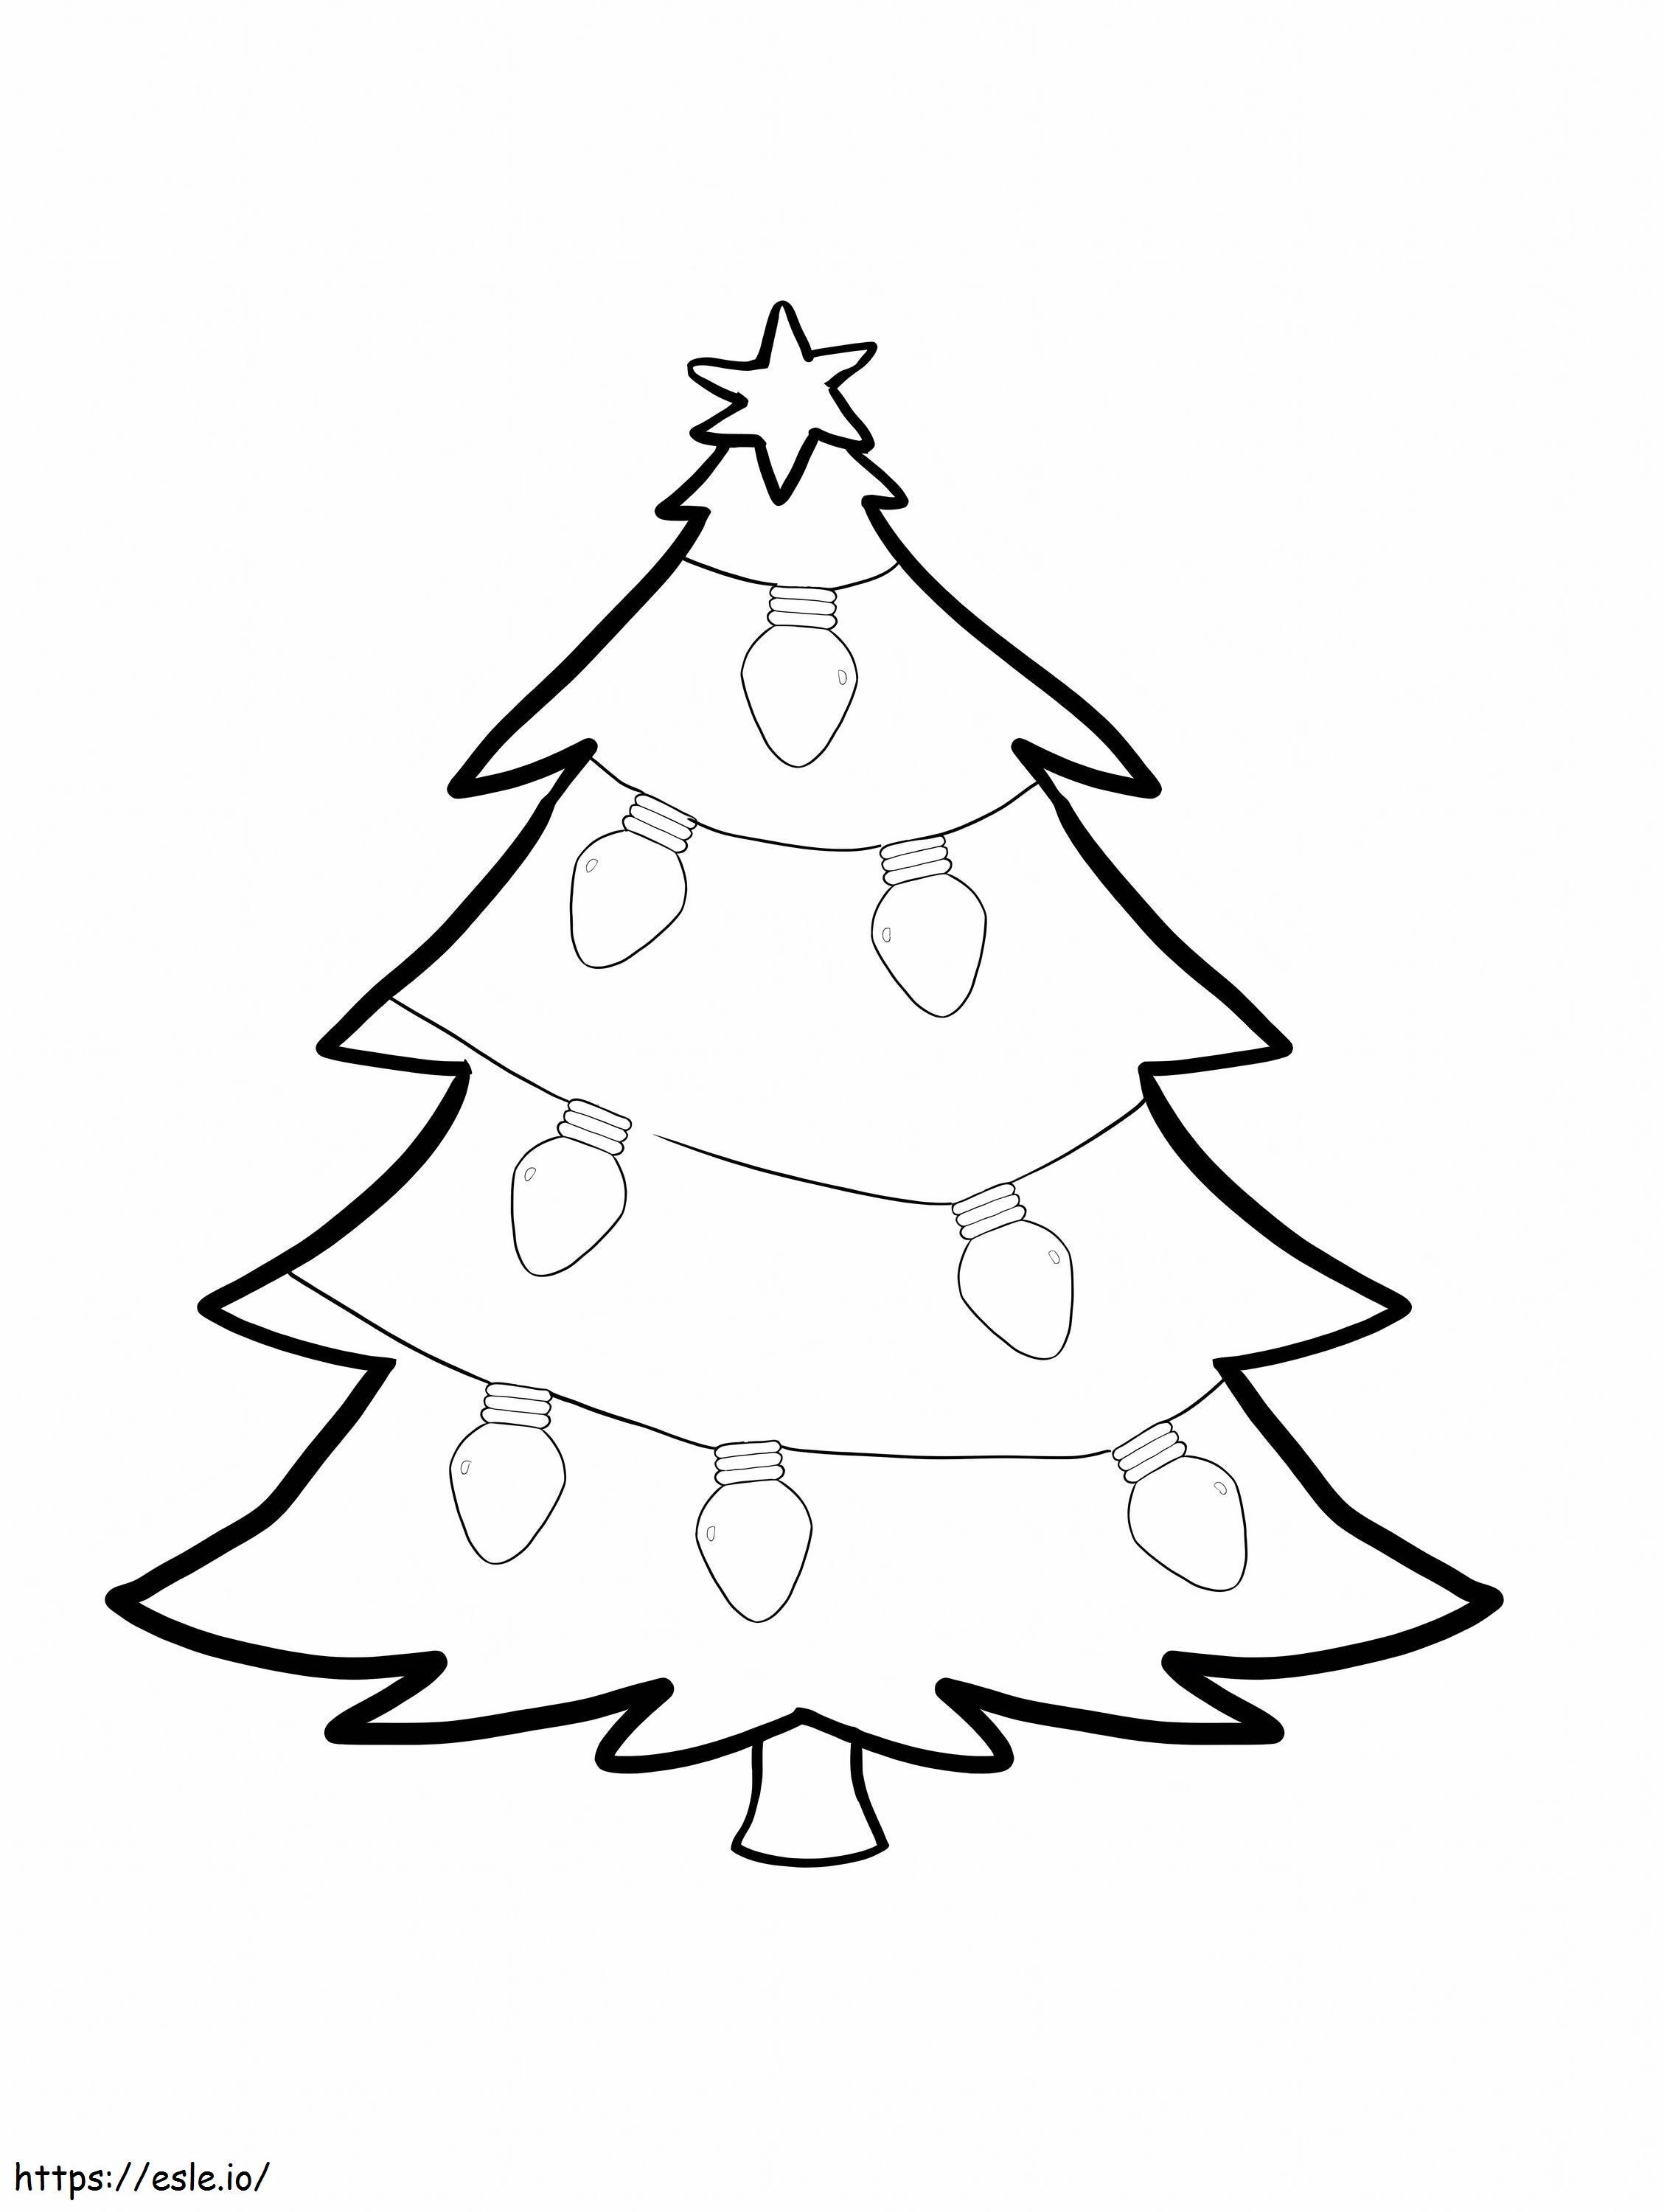 Christmas Tree Lights coloring page